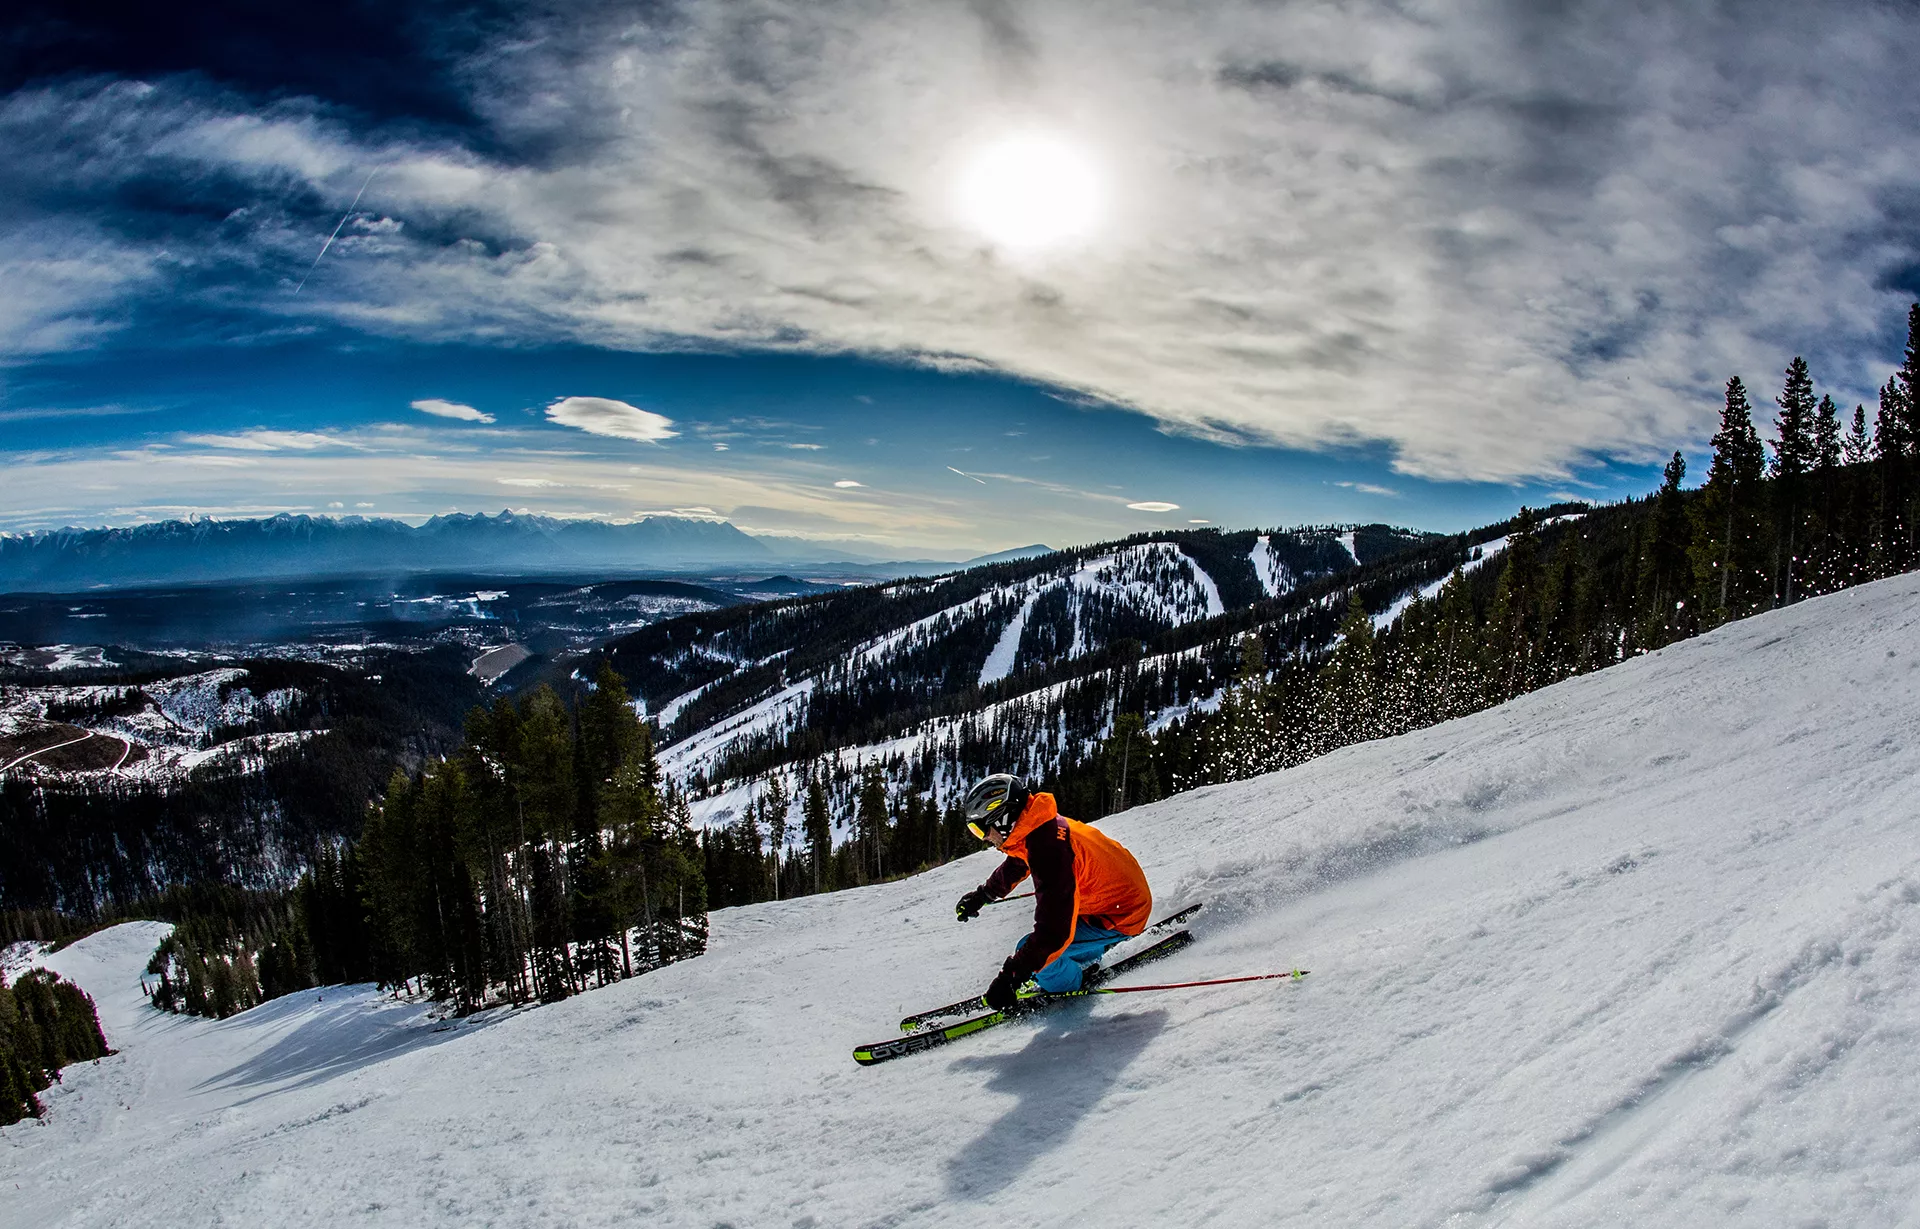 Kimberley Alpine Resort in Canada, North America | Snowboarding,Skiing - Rated 3.7